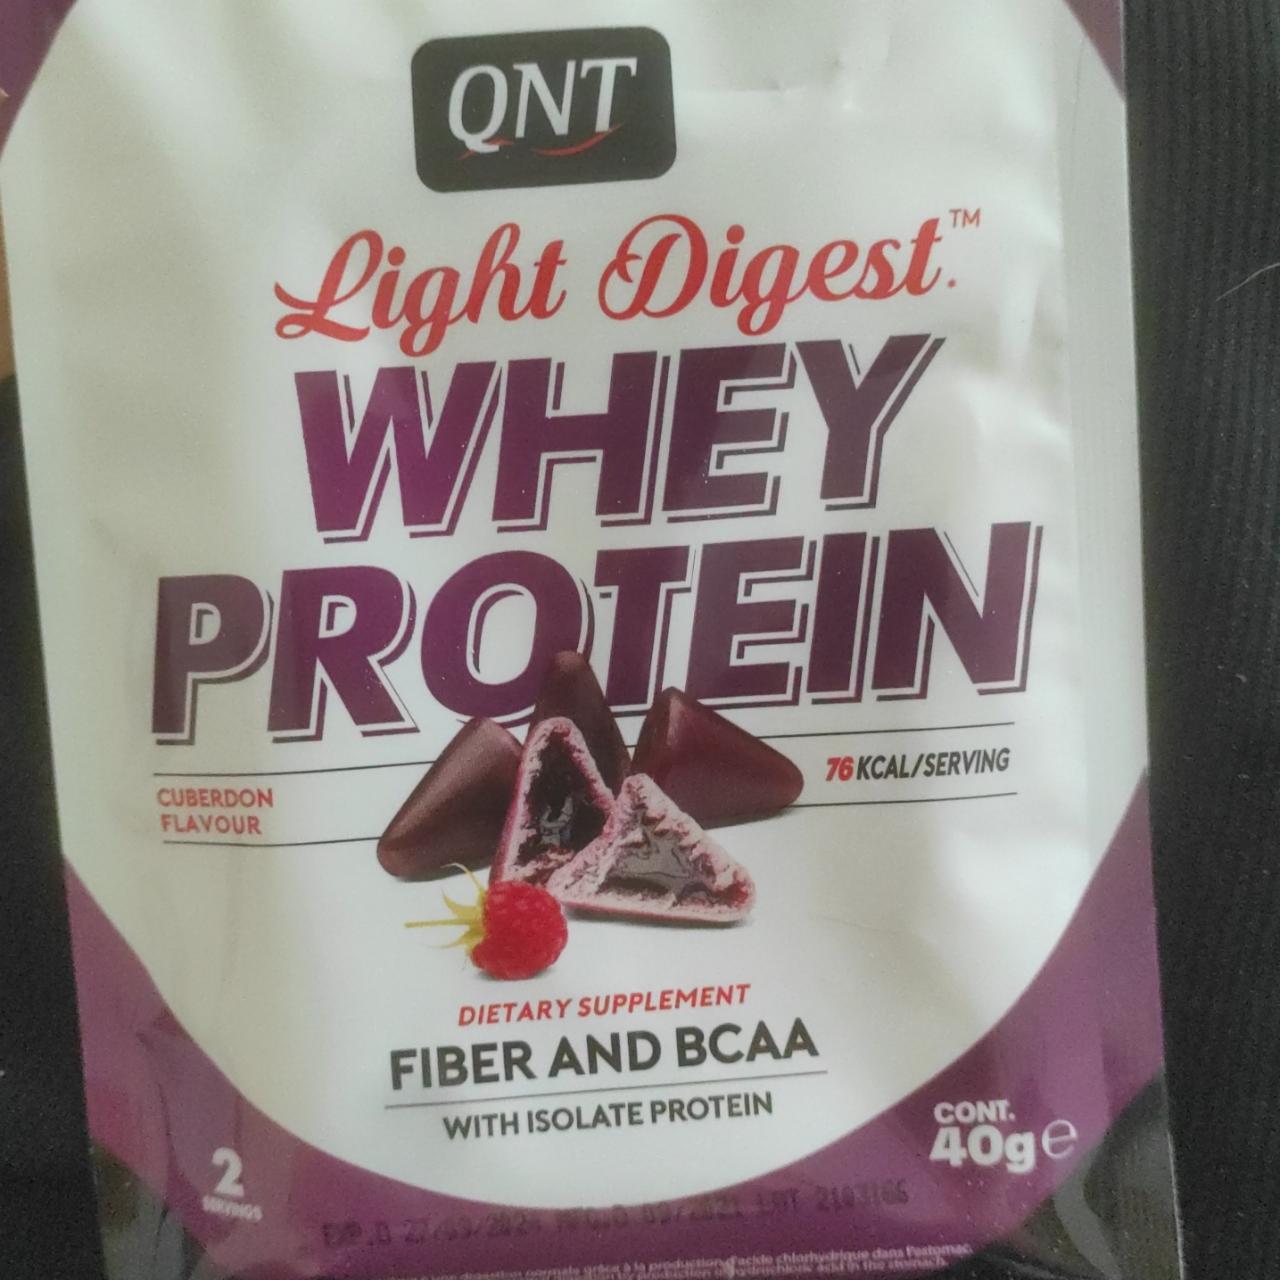 Zdjęcia - Light Digest Whey Protein Cuberdon flavour QNT